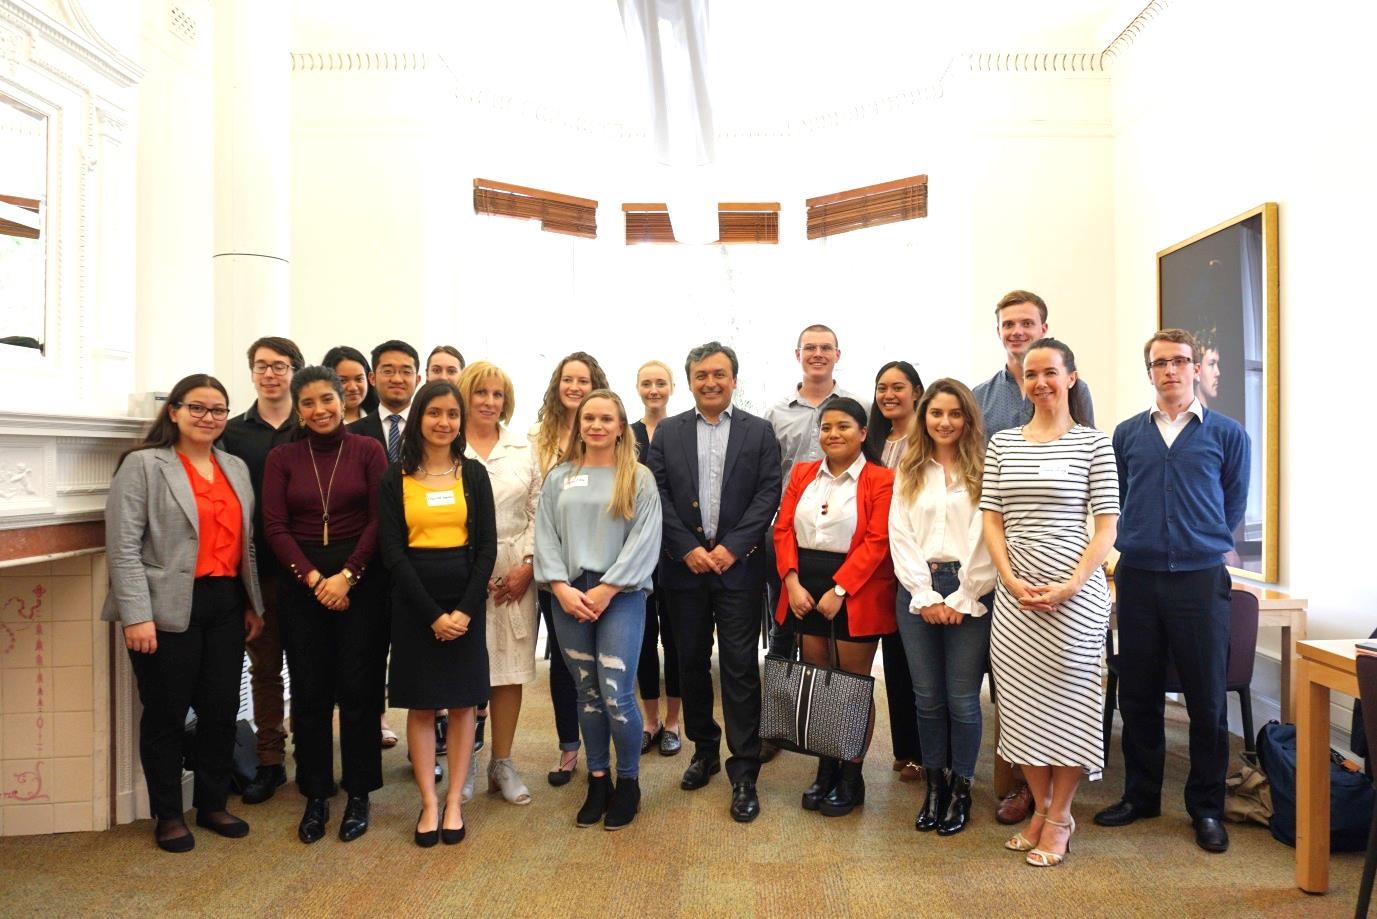 Consulado de Colombia en Auckland saludó a estudiantes neozelandeses que realizarán pasantías en Colombia